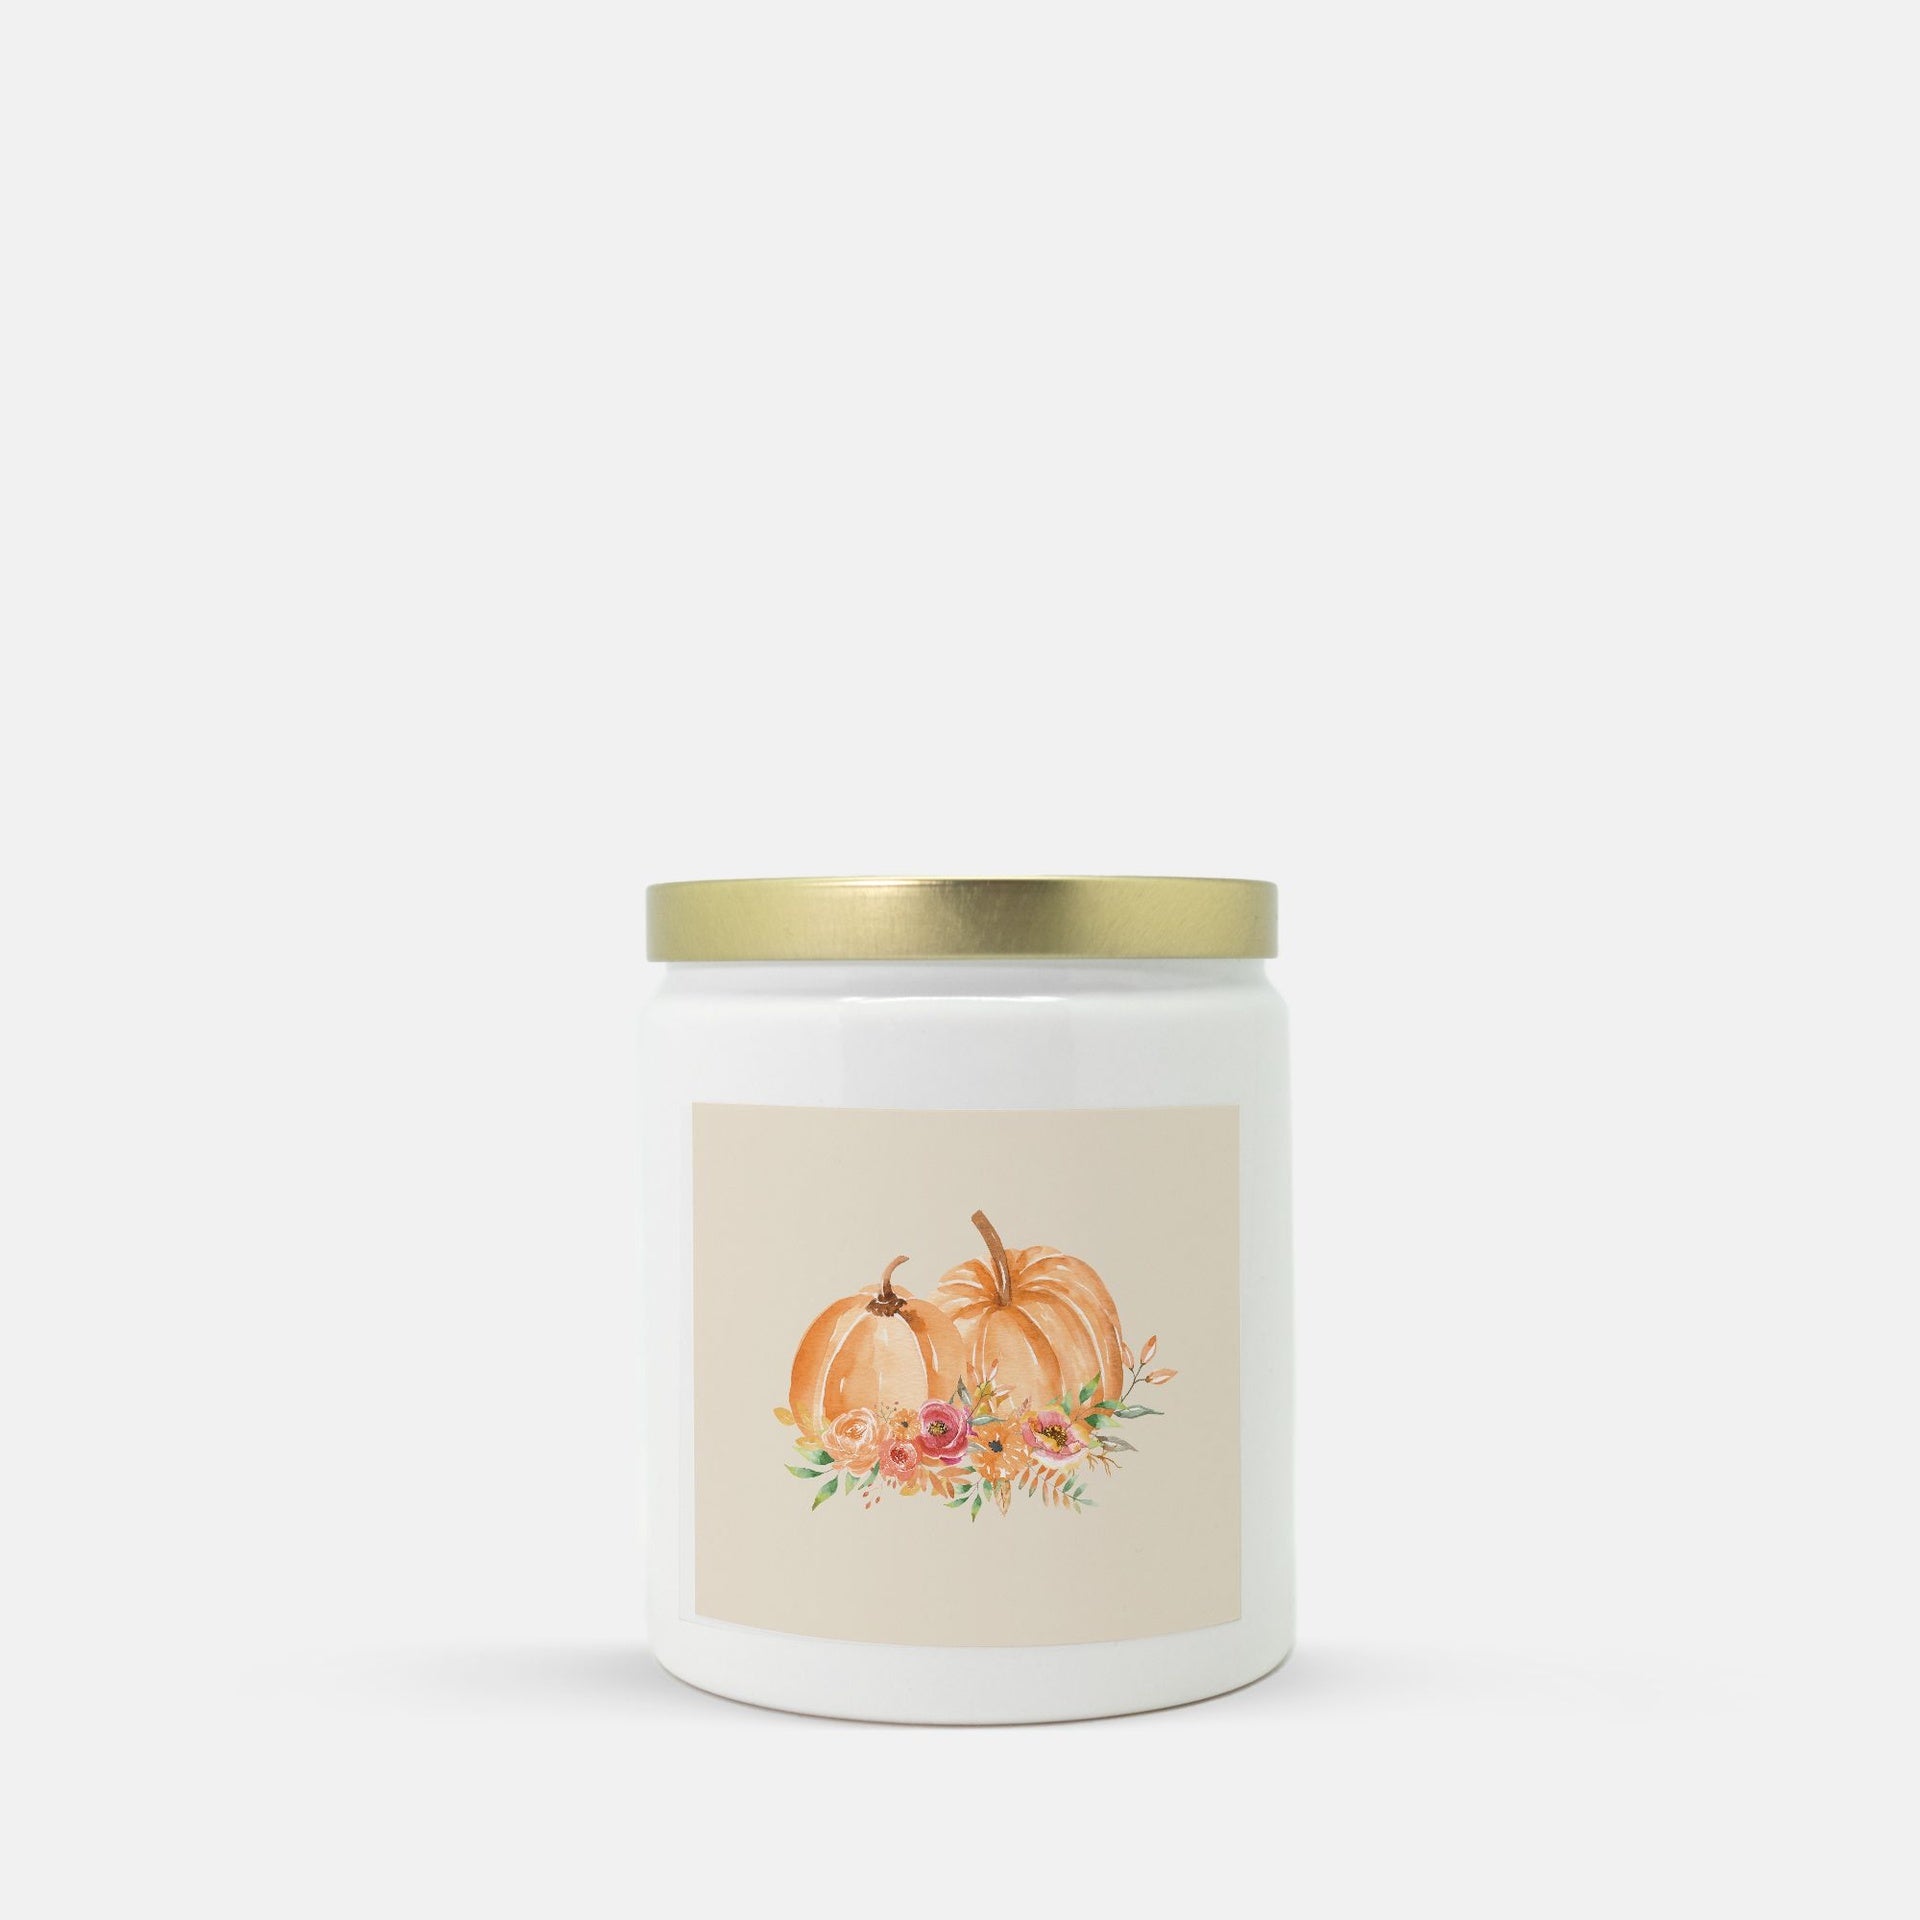 Lifestyle Details - Orange Pumpkins Watercolor Ceramic Candle w/ Gold Lid - Macintosh